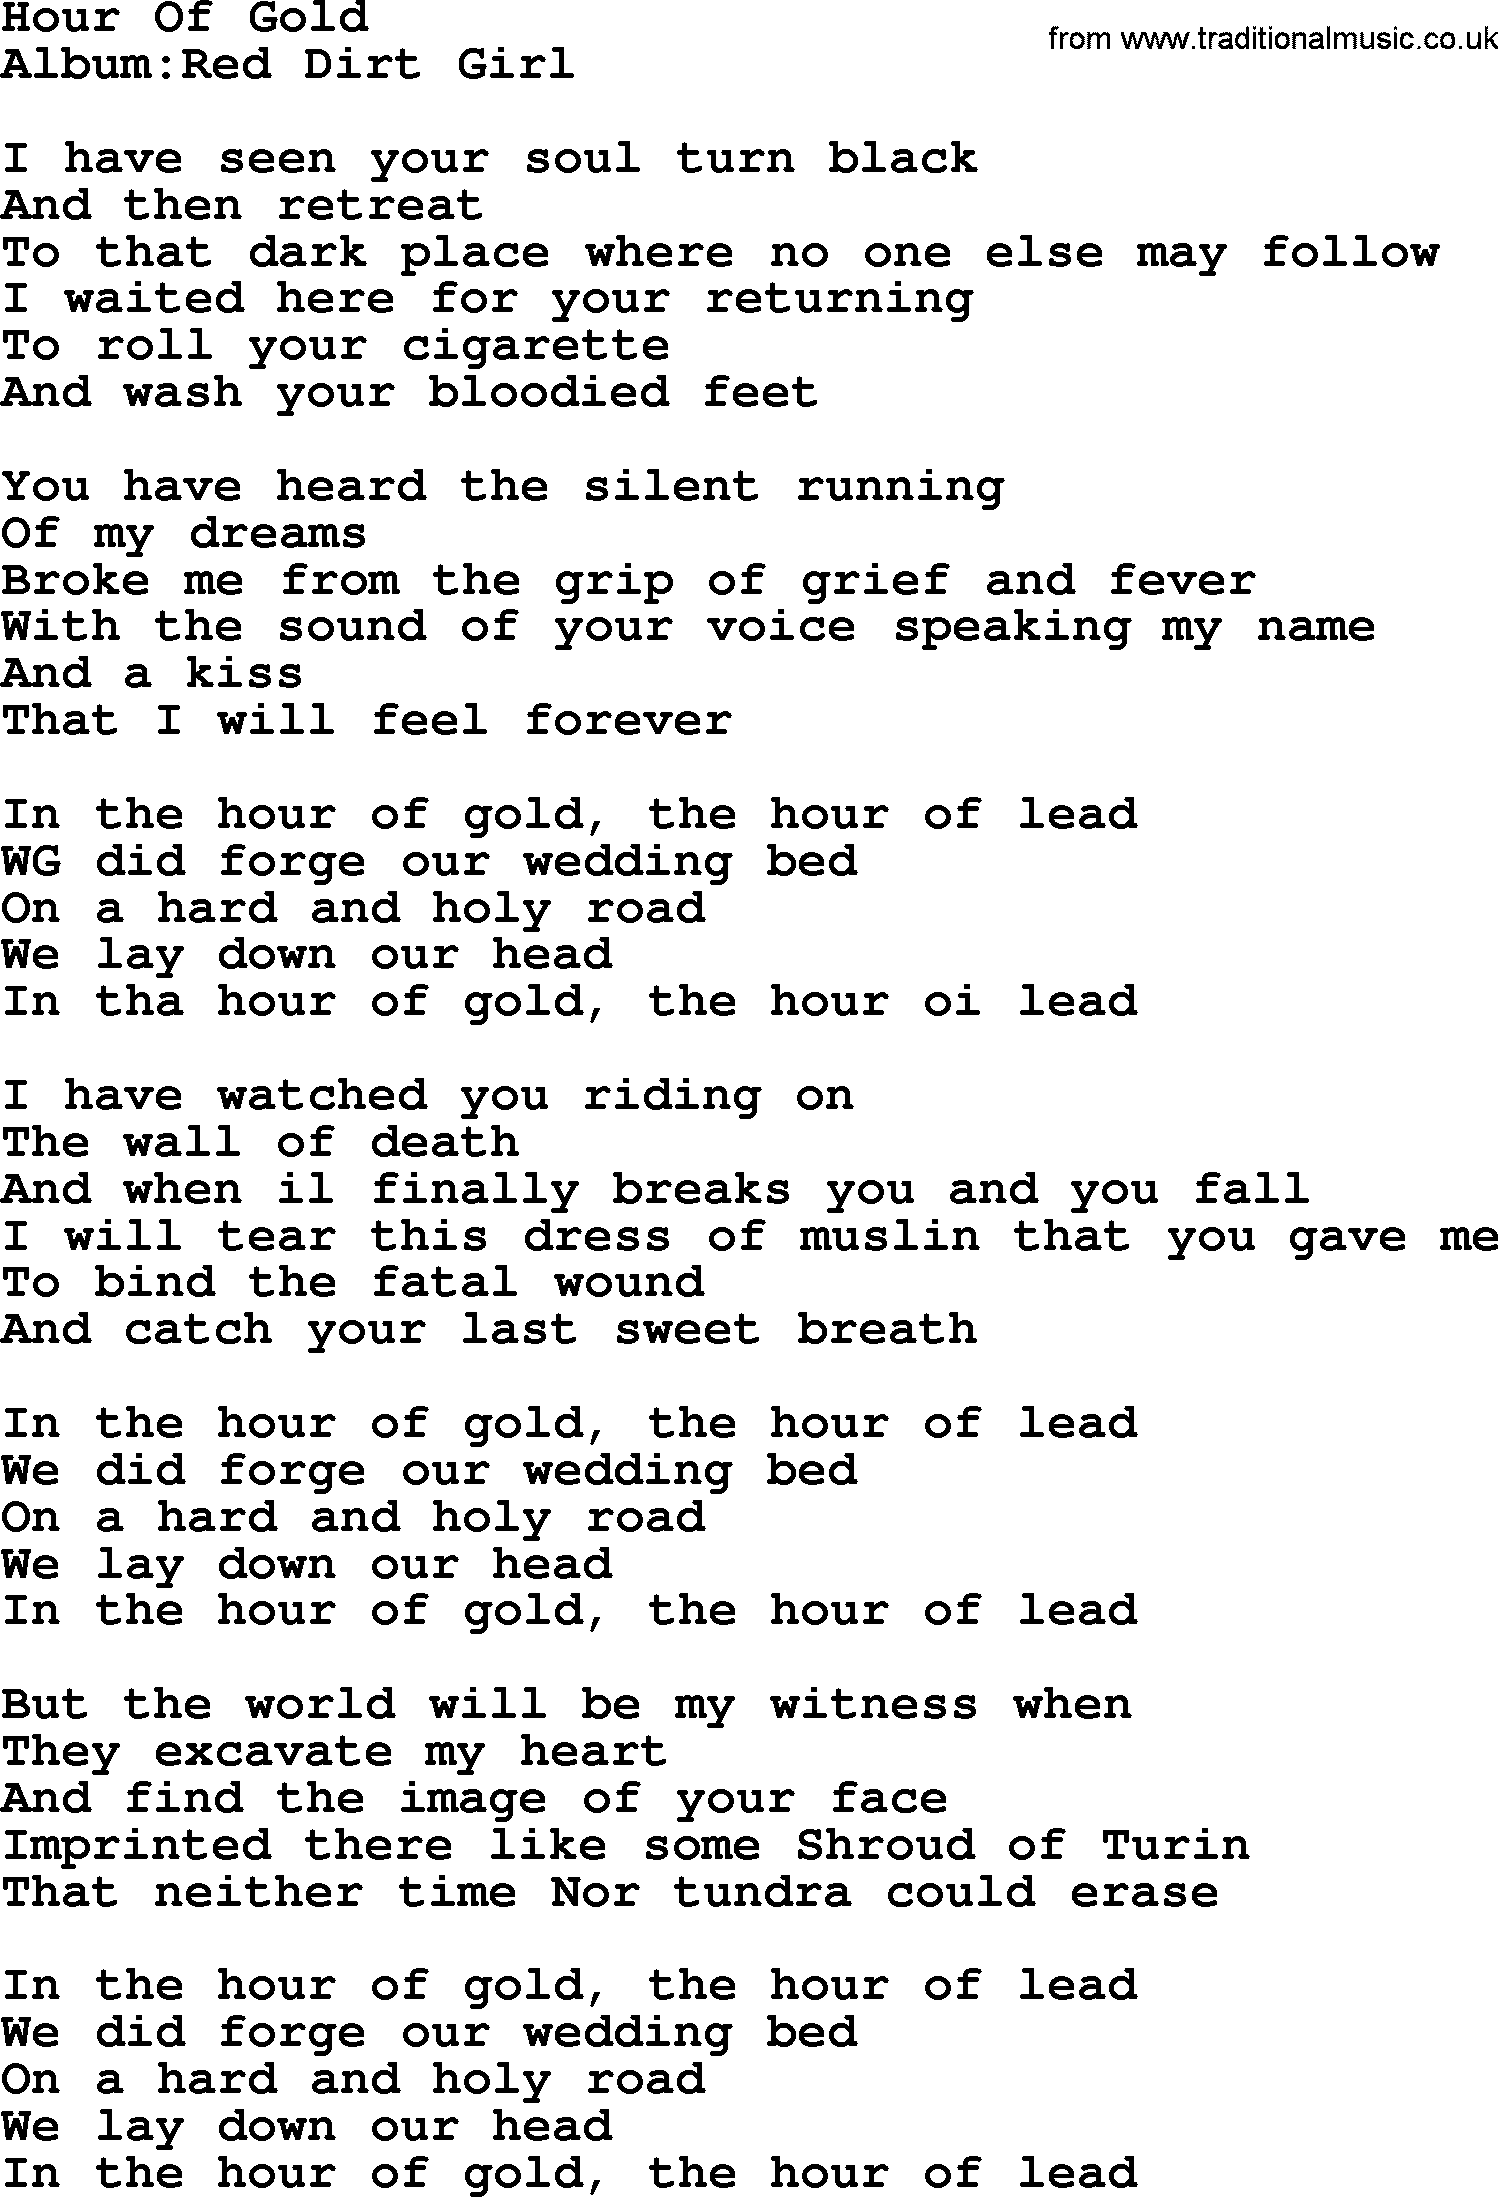 Emmylou Harris song: Hour Of Gold lyrics